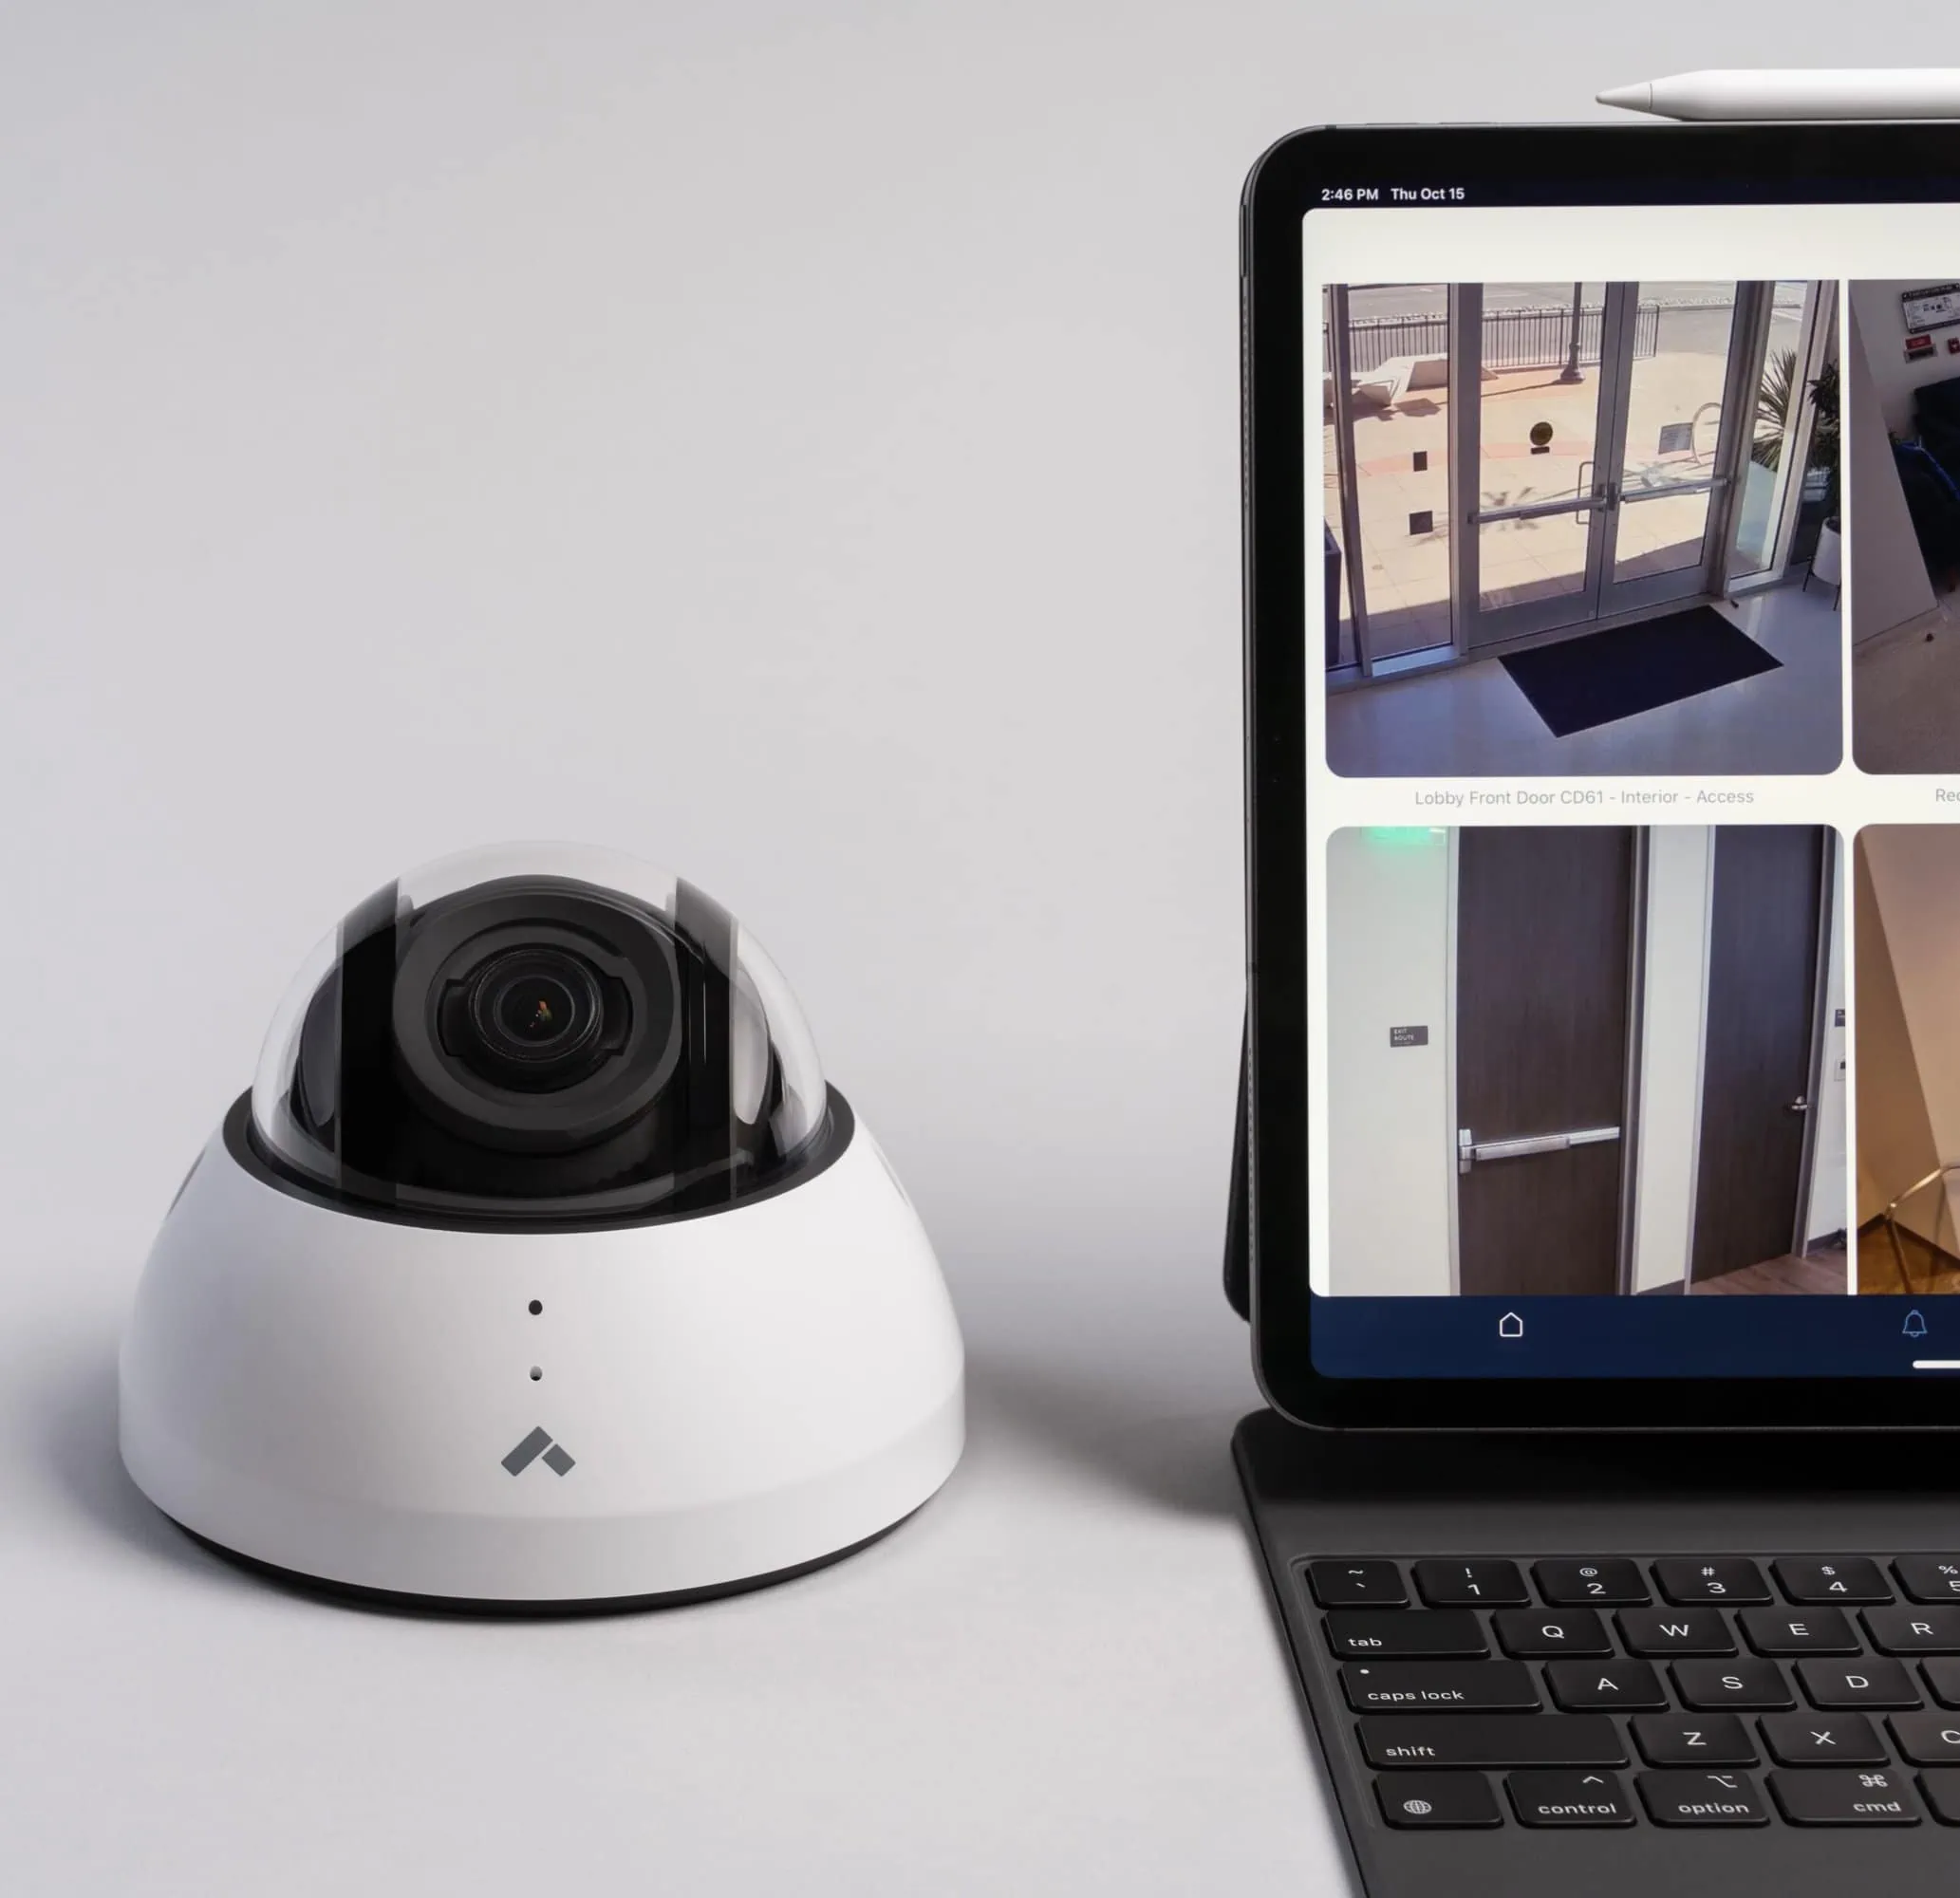 Dome recording surveillance camera next to laptop displaying footage